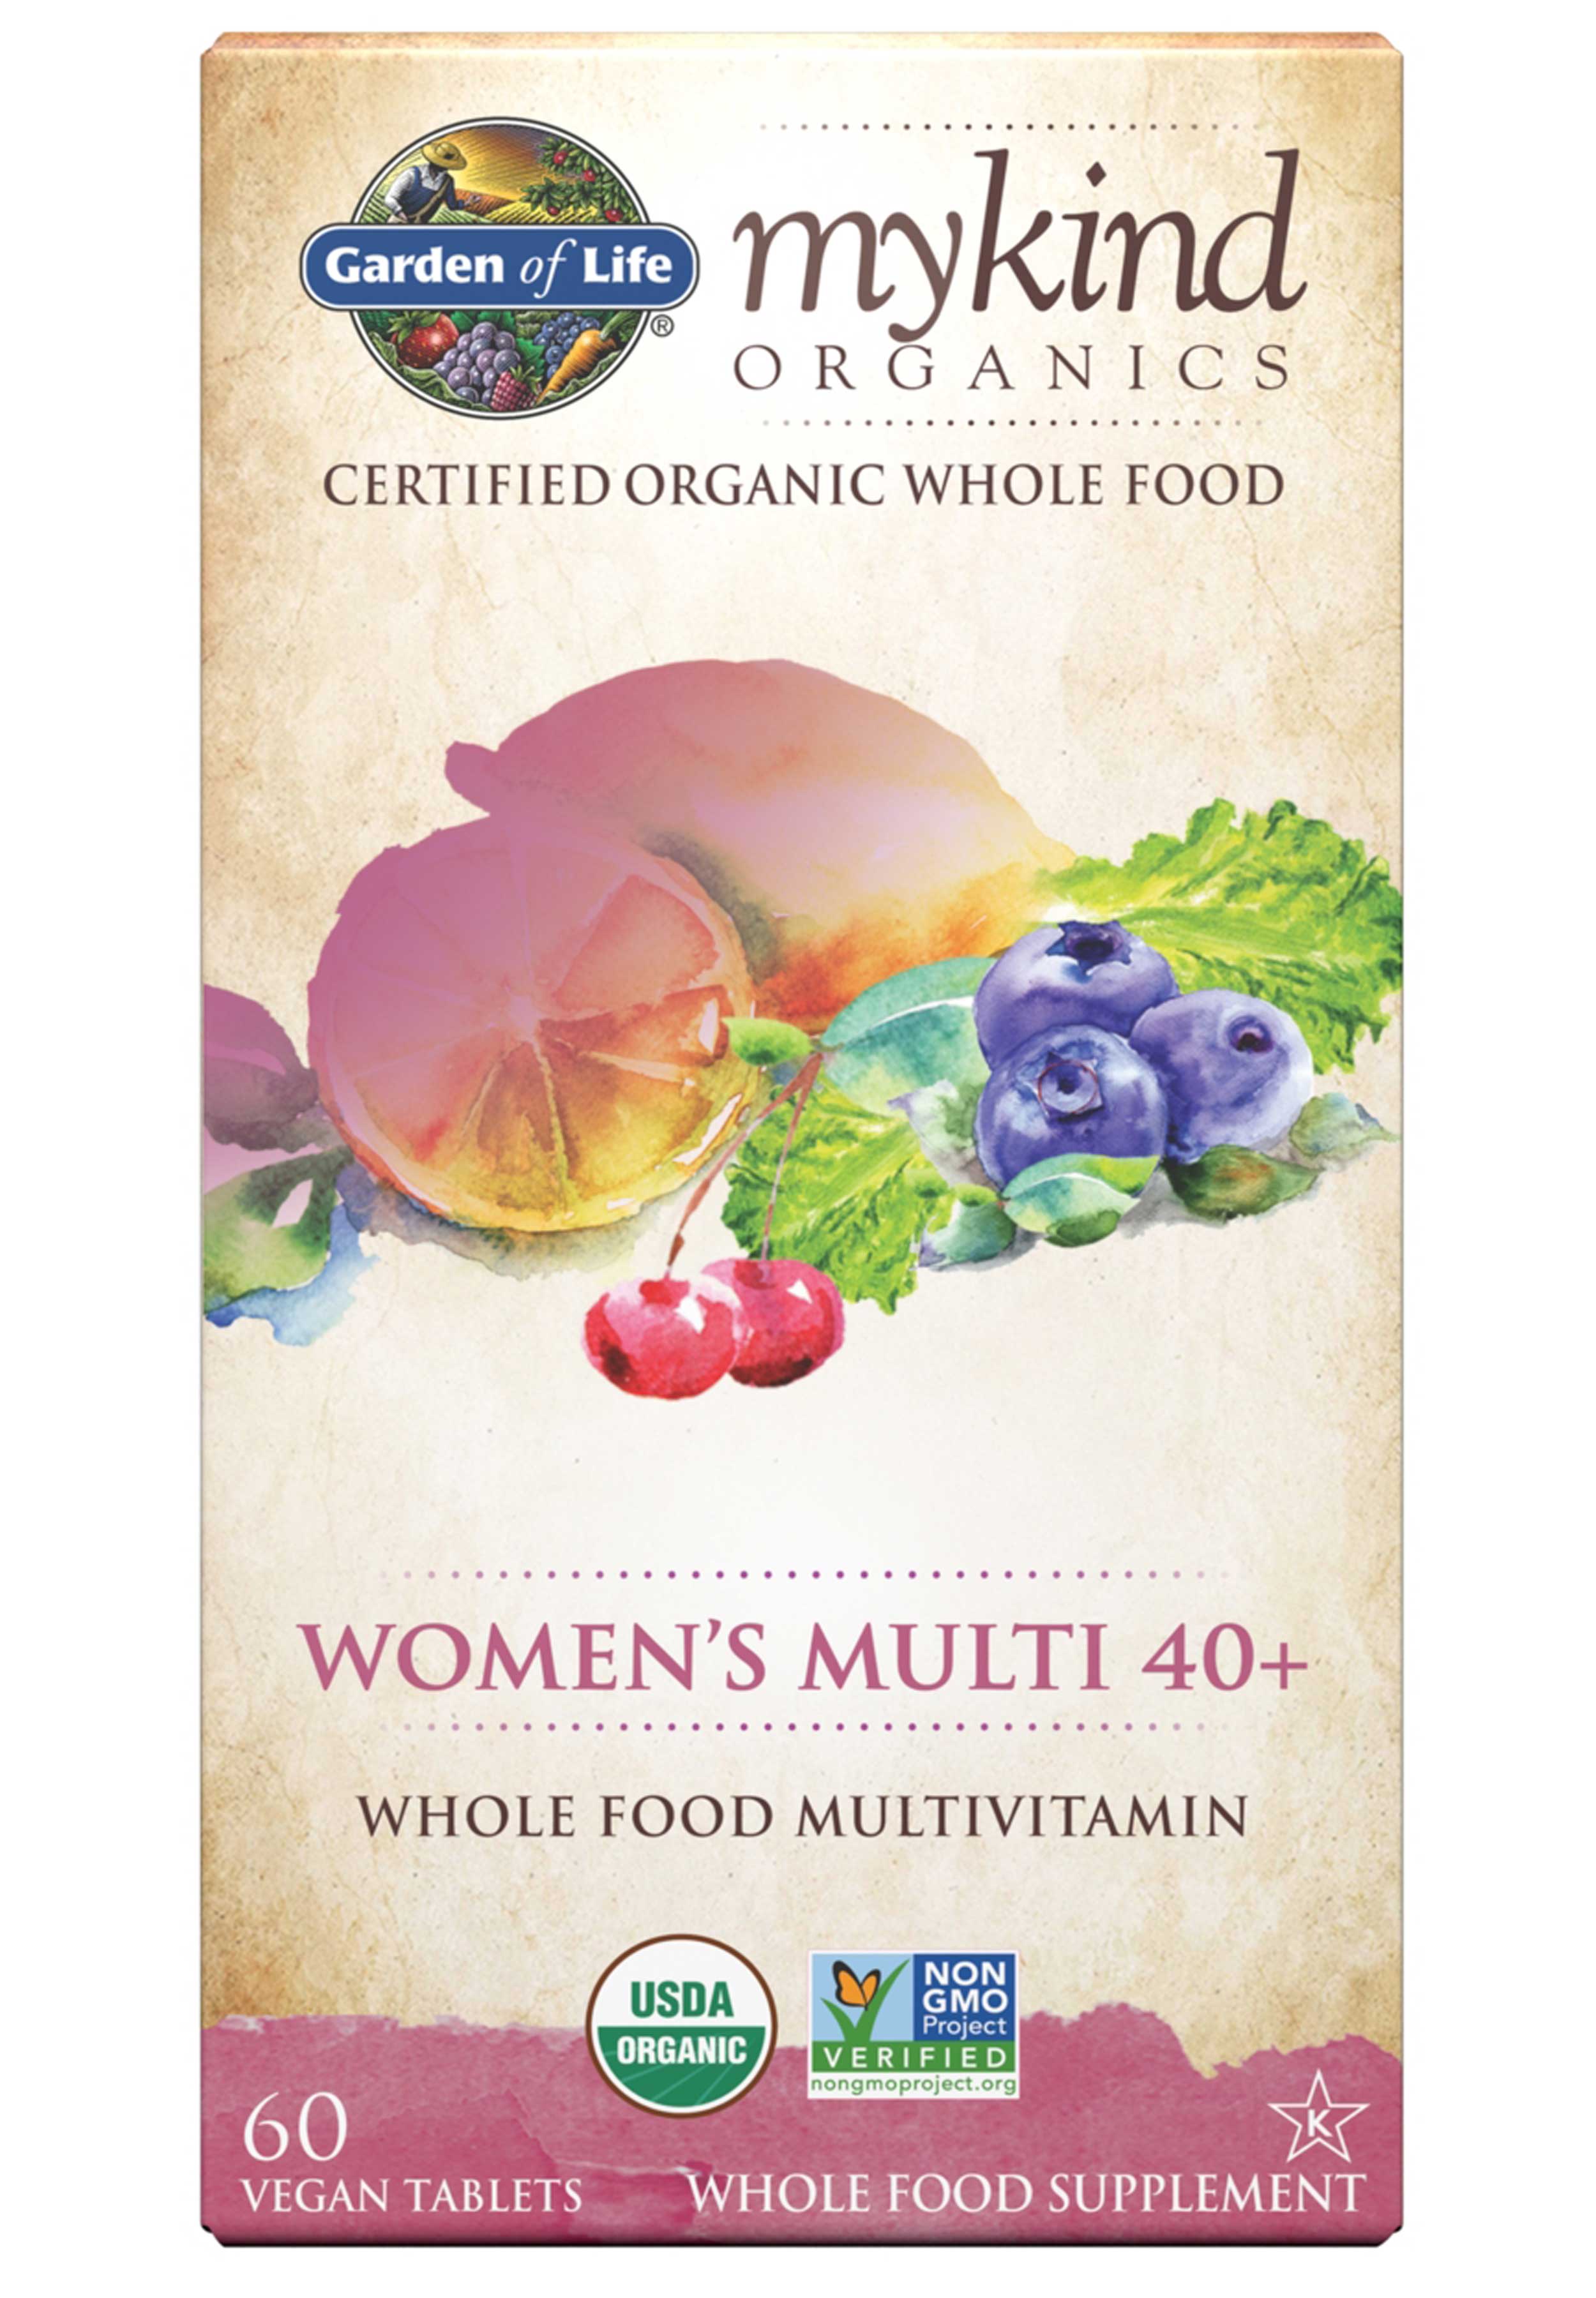 Garden of Life mykind Organics Women's Multivitamin 40+